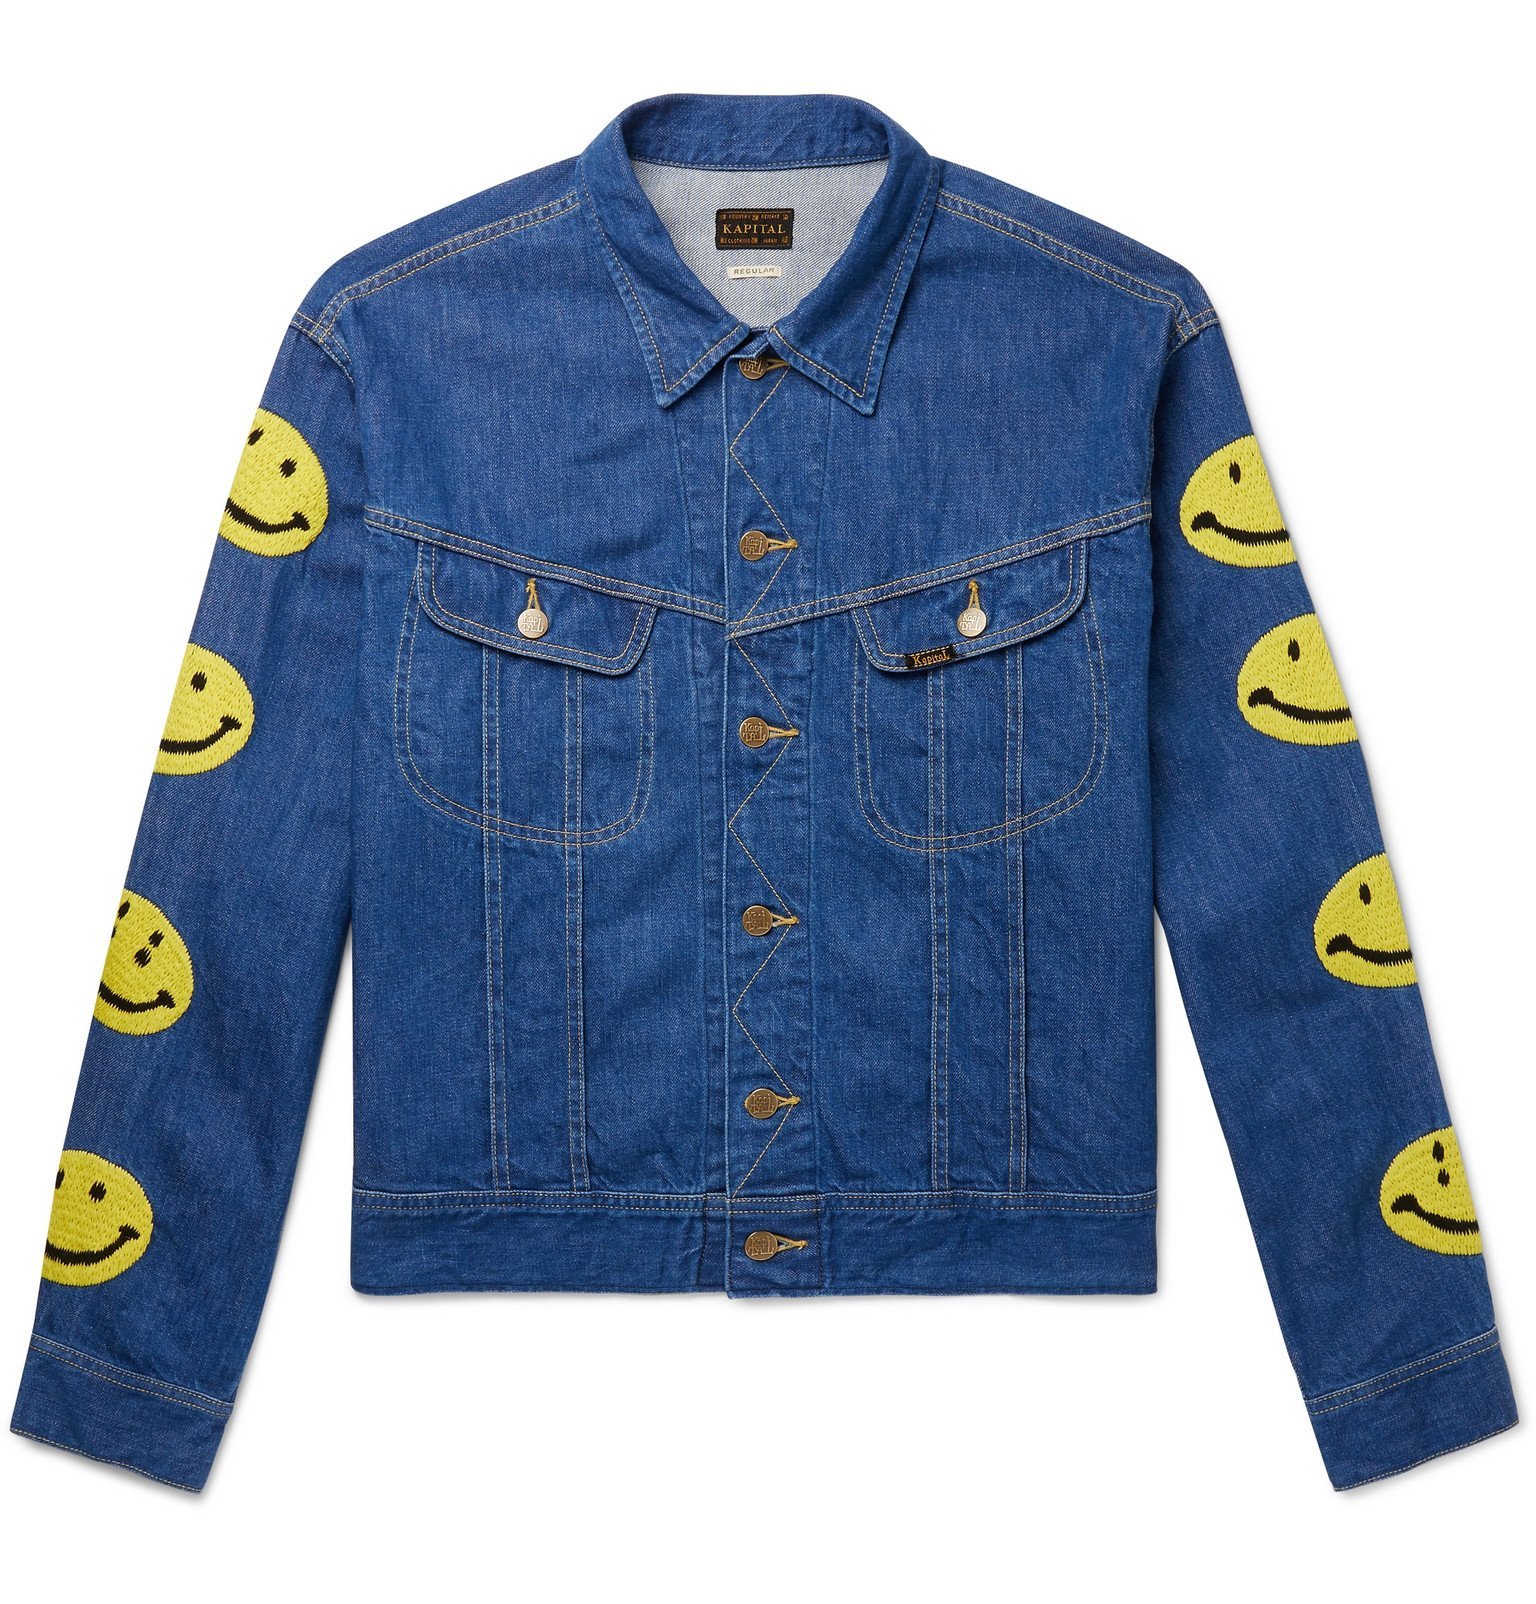 KAPITAL - Embroidered Denim Jacket - Blue KAPITAL